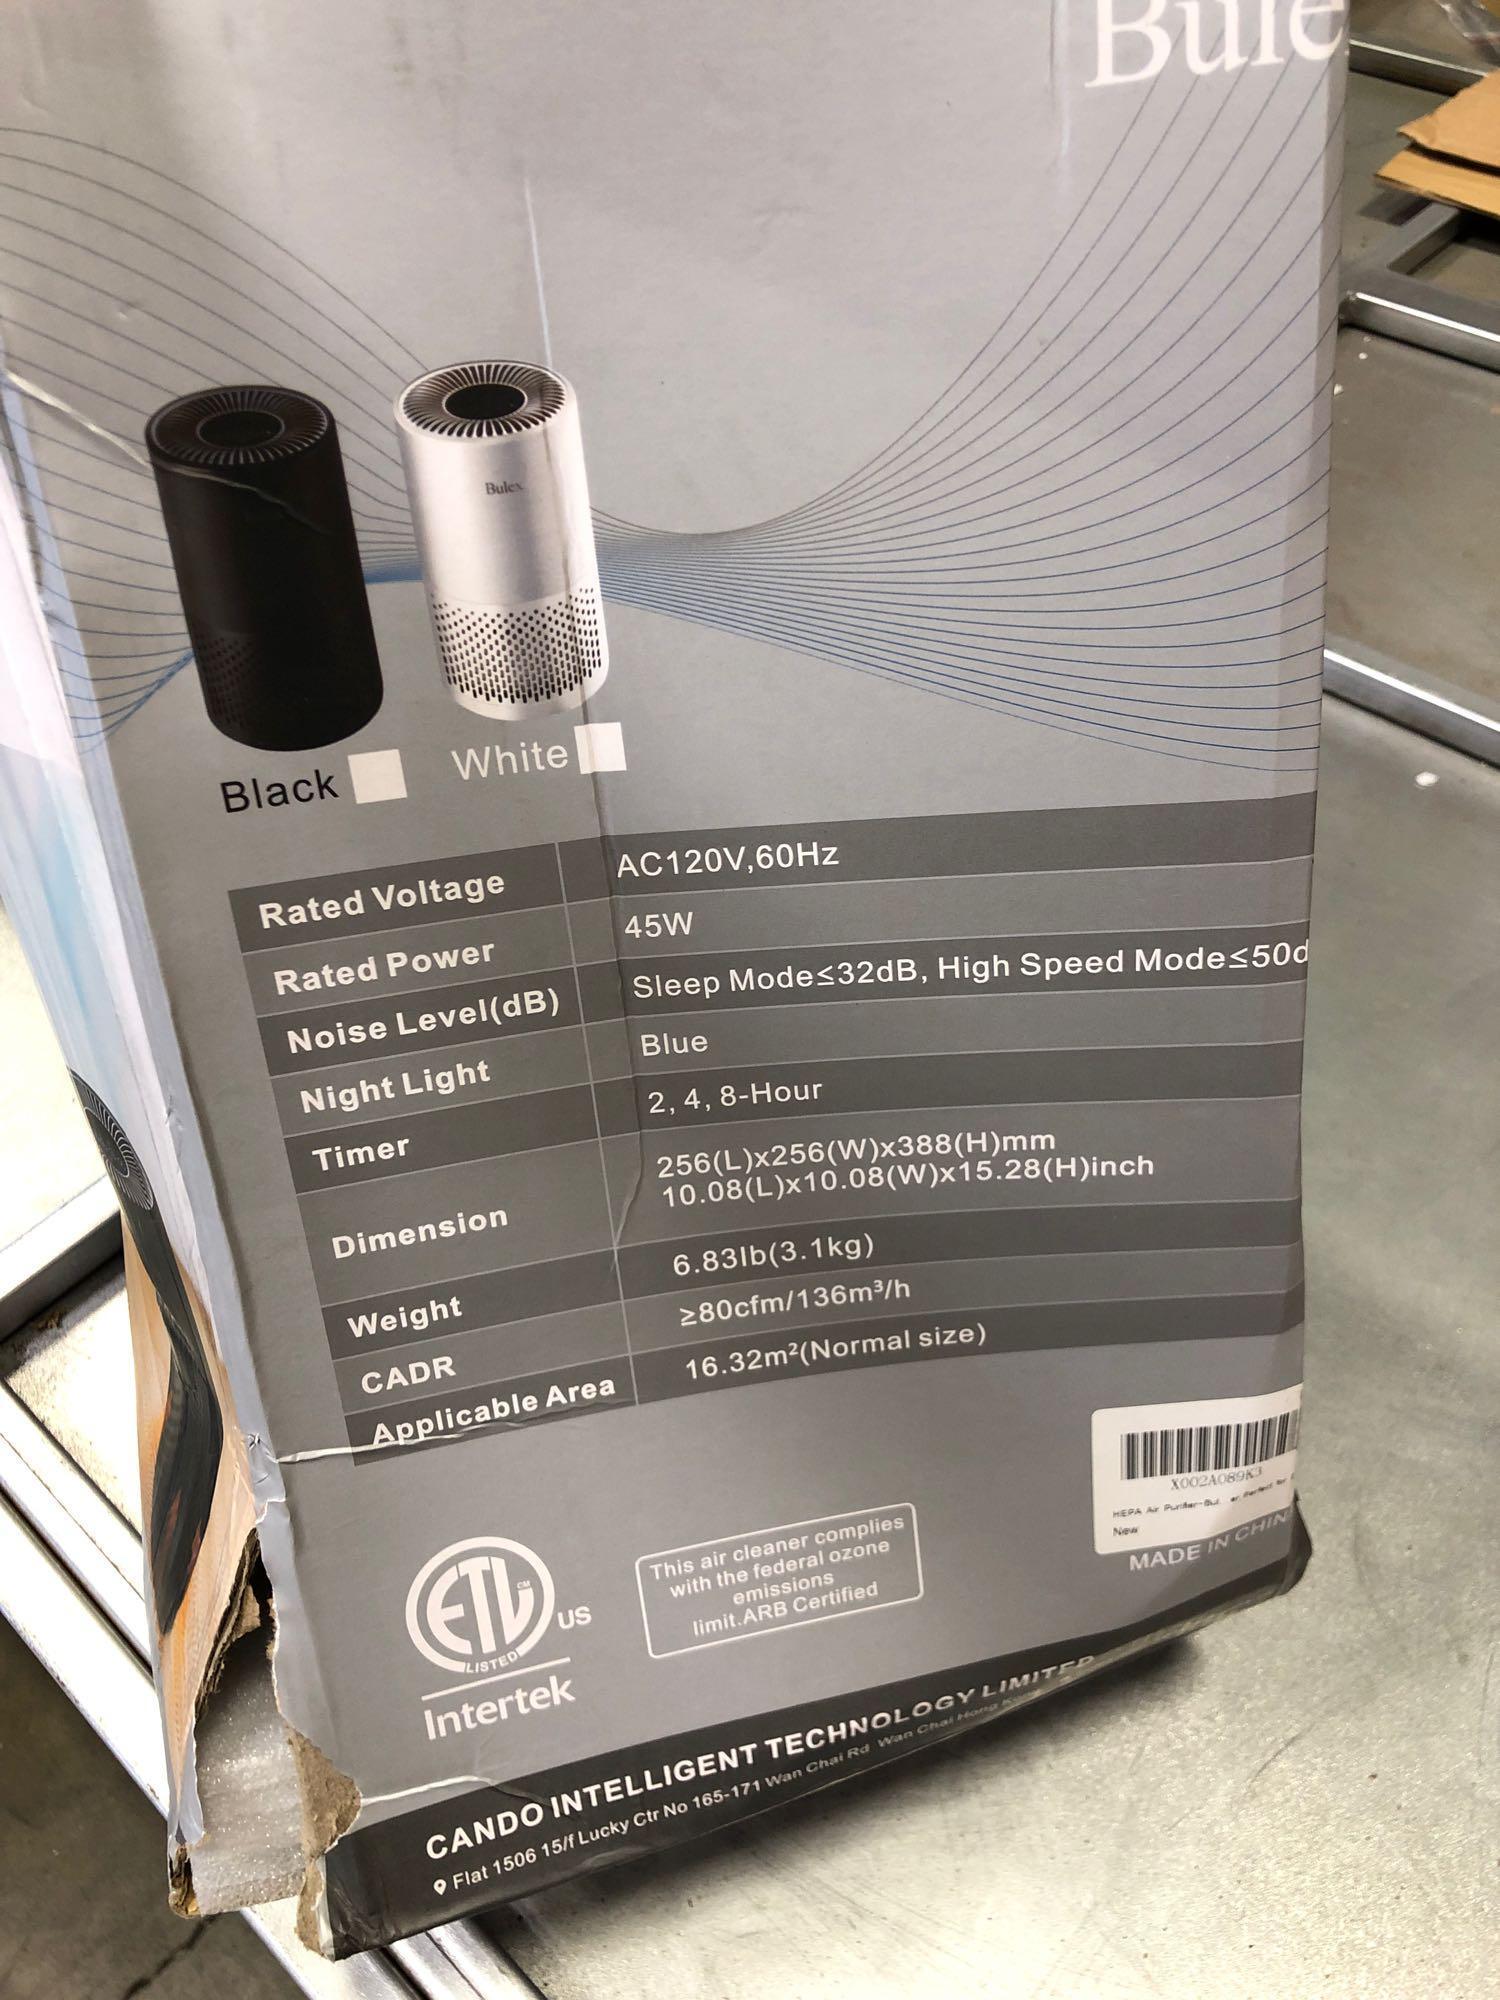 Bulex Hepa Air Purifier Air Purifier with True HEPA Filter for 99.97% Purification